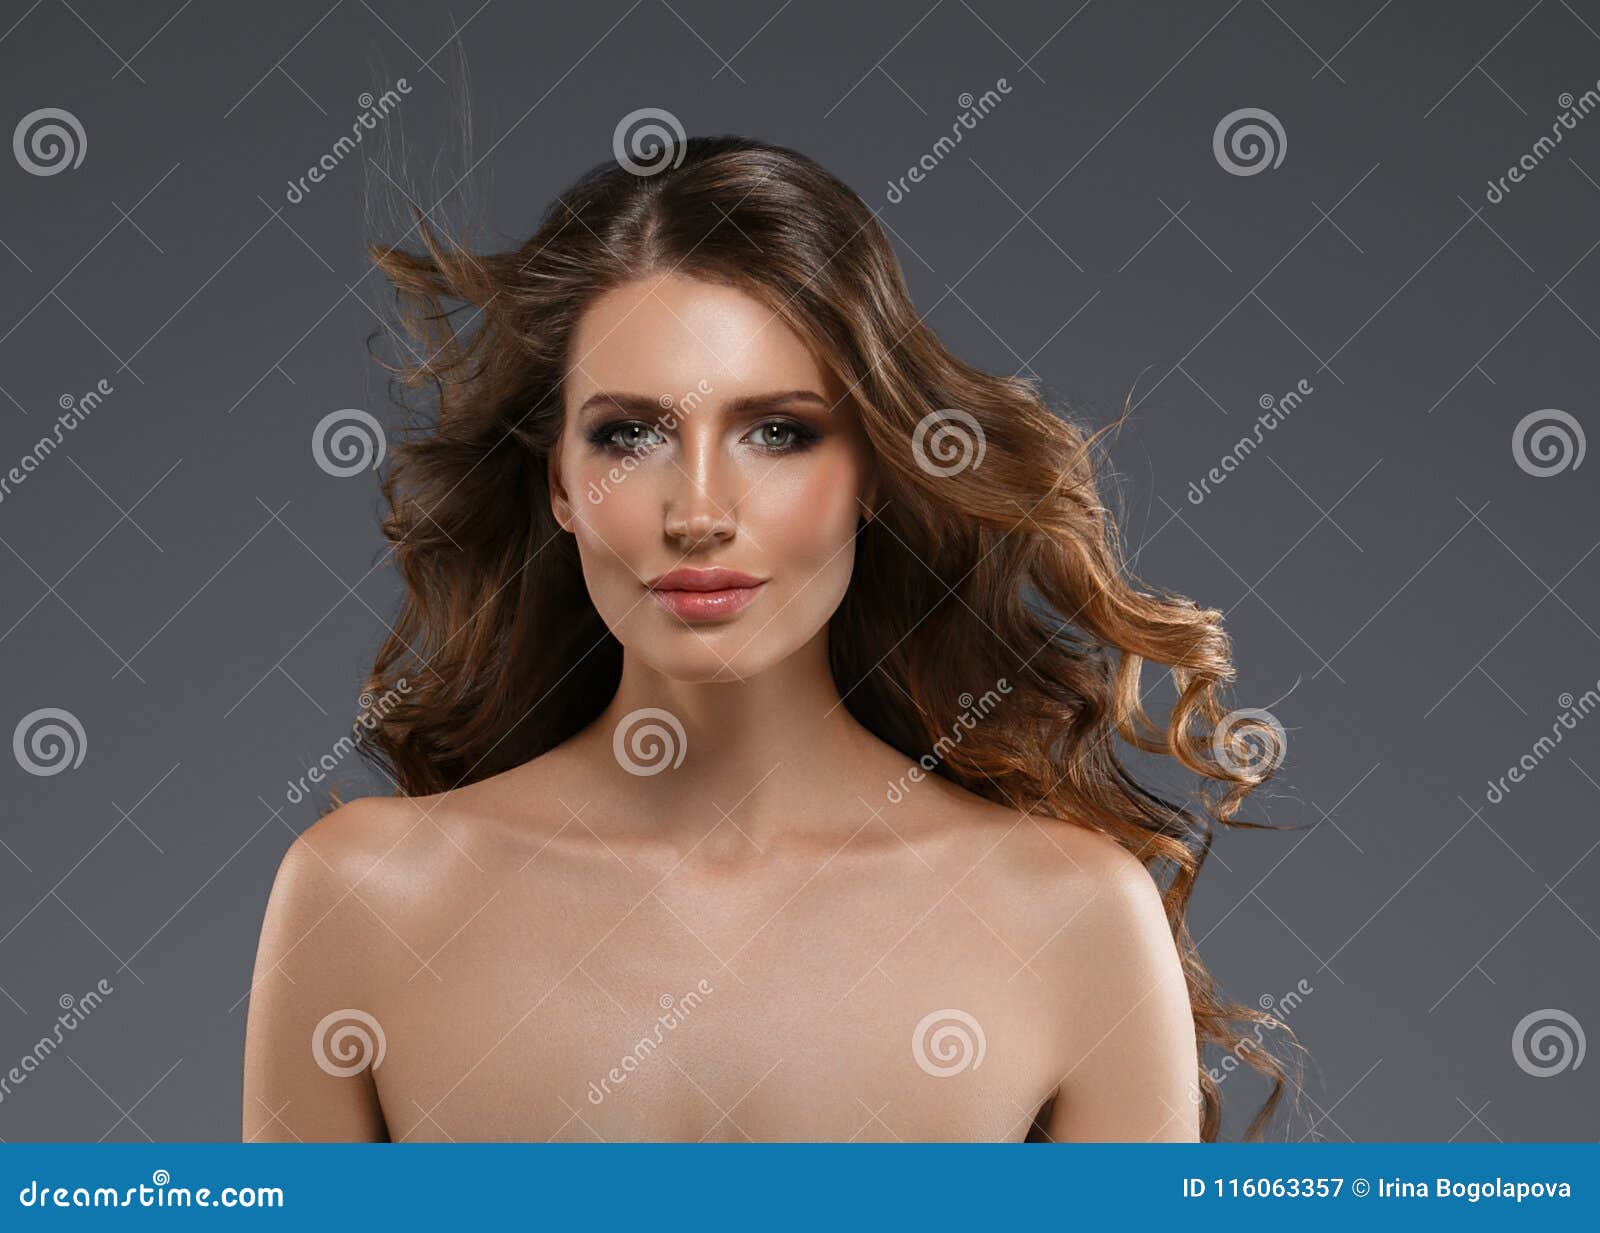 Beauty Woman Long Black Hair Beautiful Spa Model Girl With Perfect Fresh Clean Skin Stock Image 